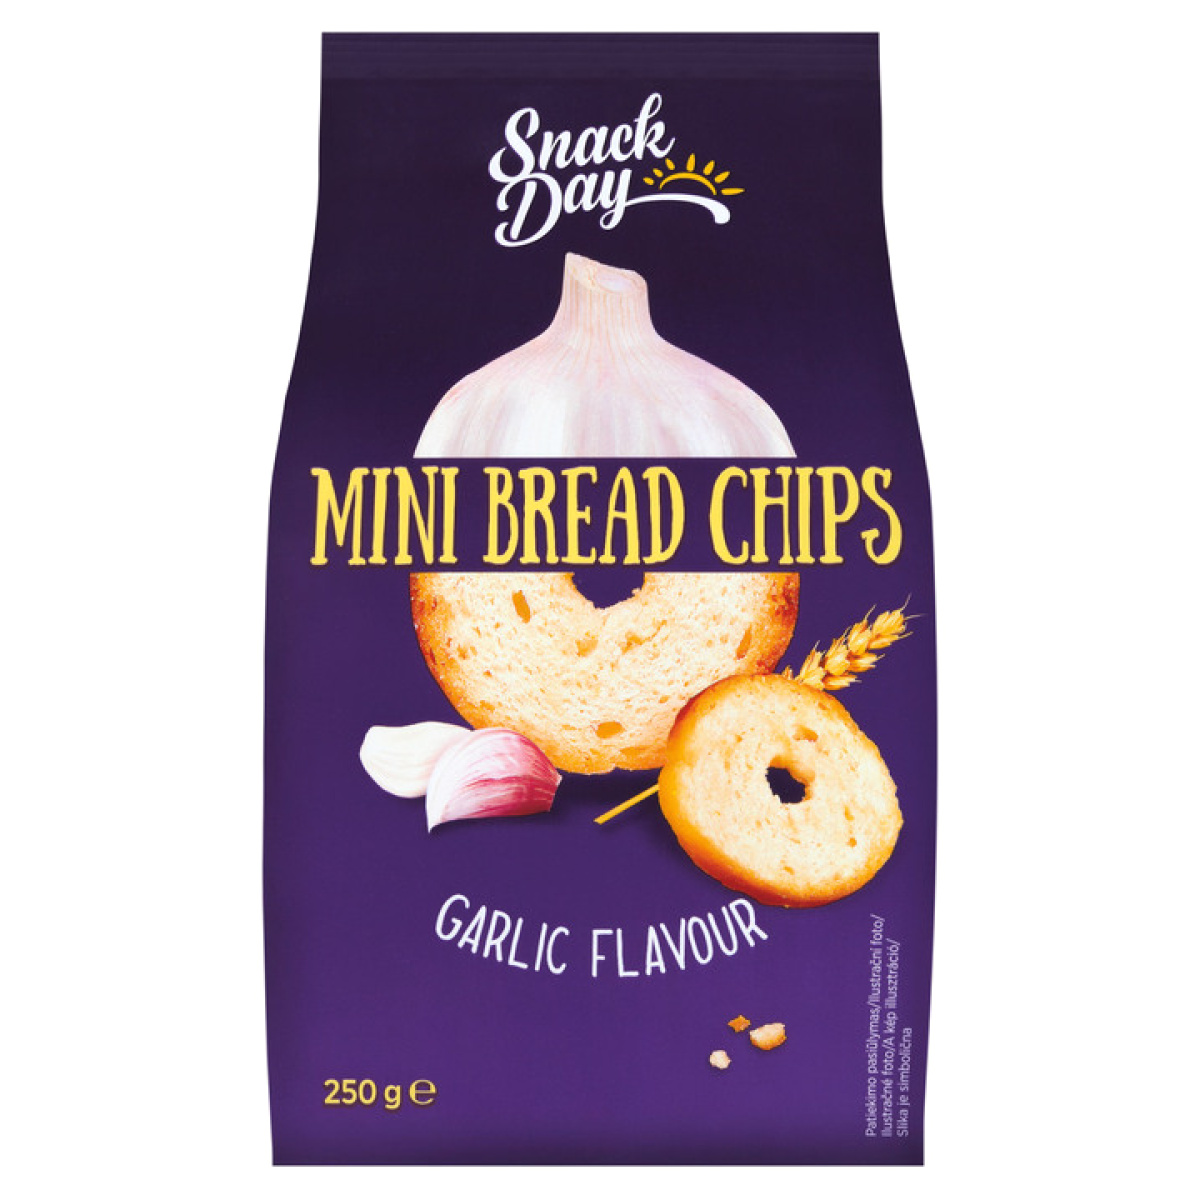 Krekry mini chips Snack bread Day levně